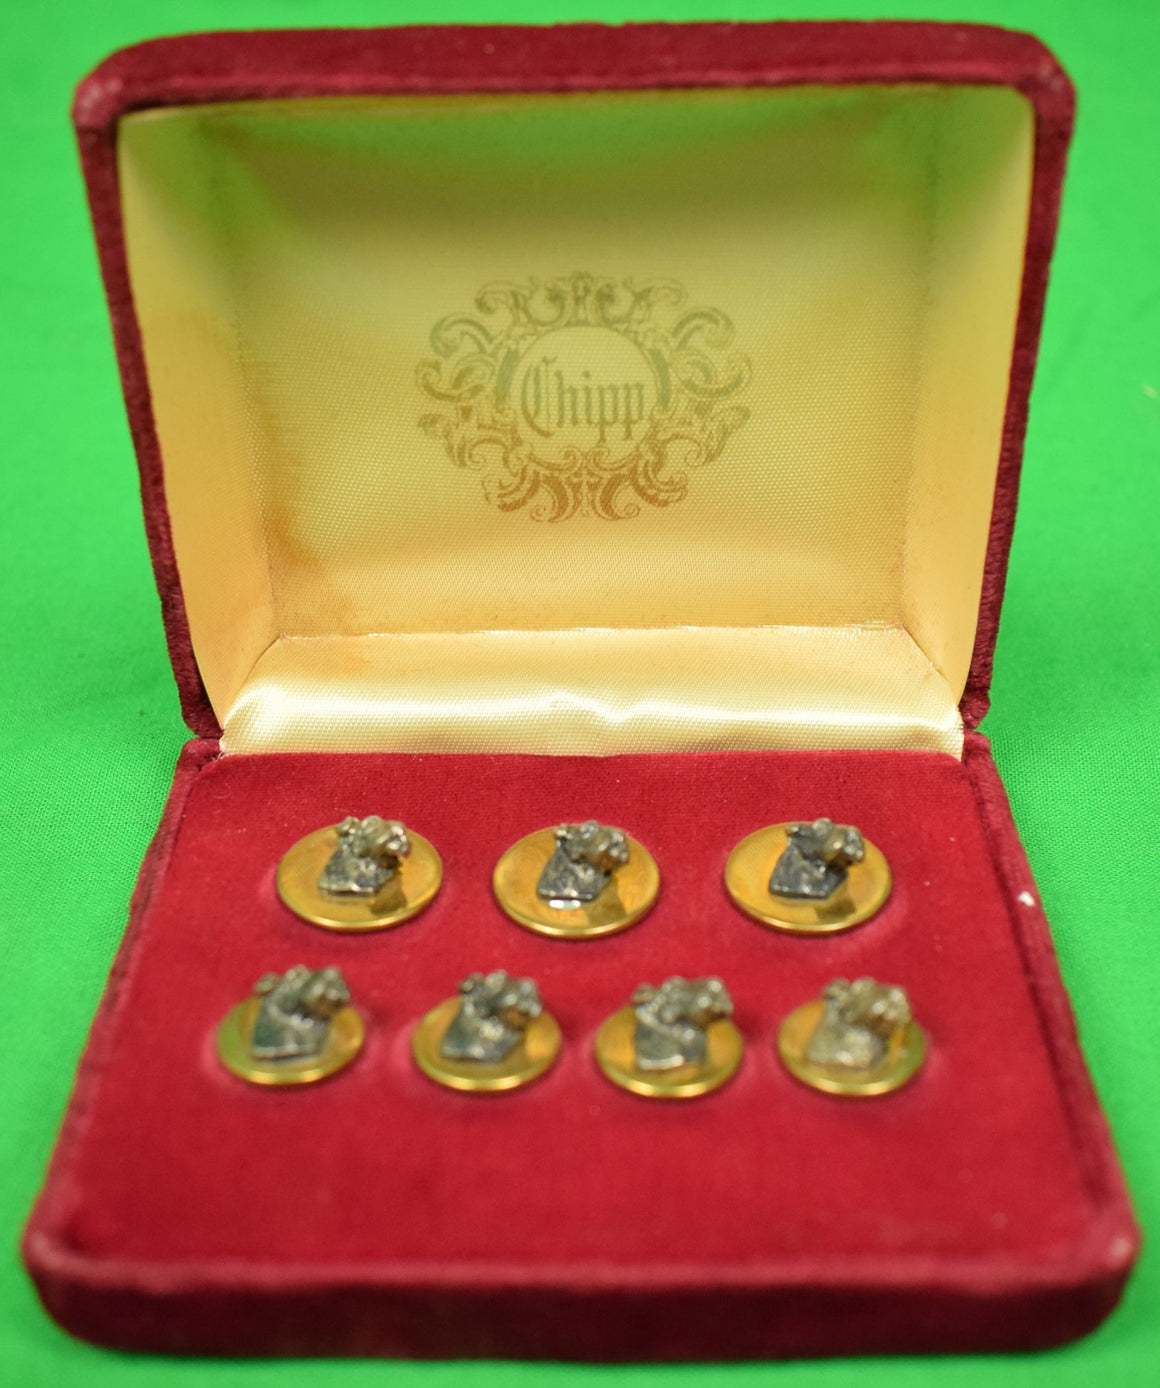 "Chipp Dog-Head Brass Blazer Buttons" (New/ Old Stock in Box)